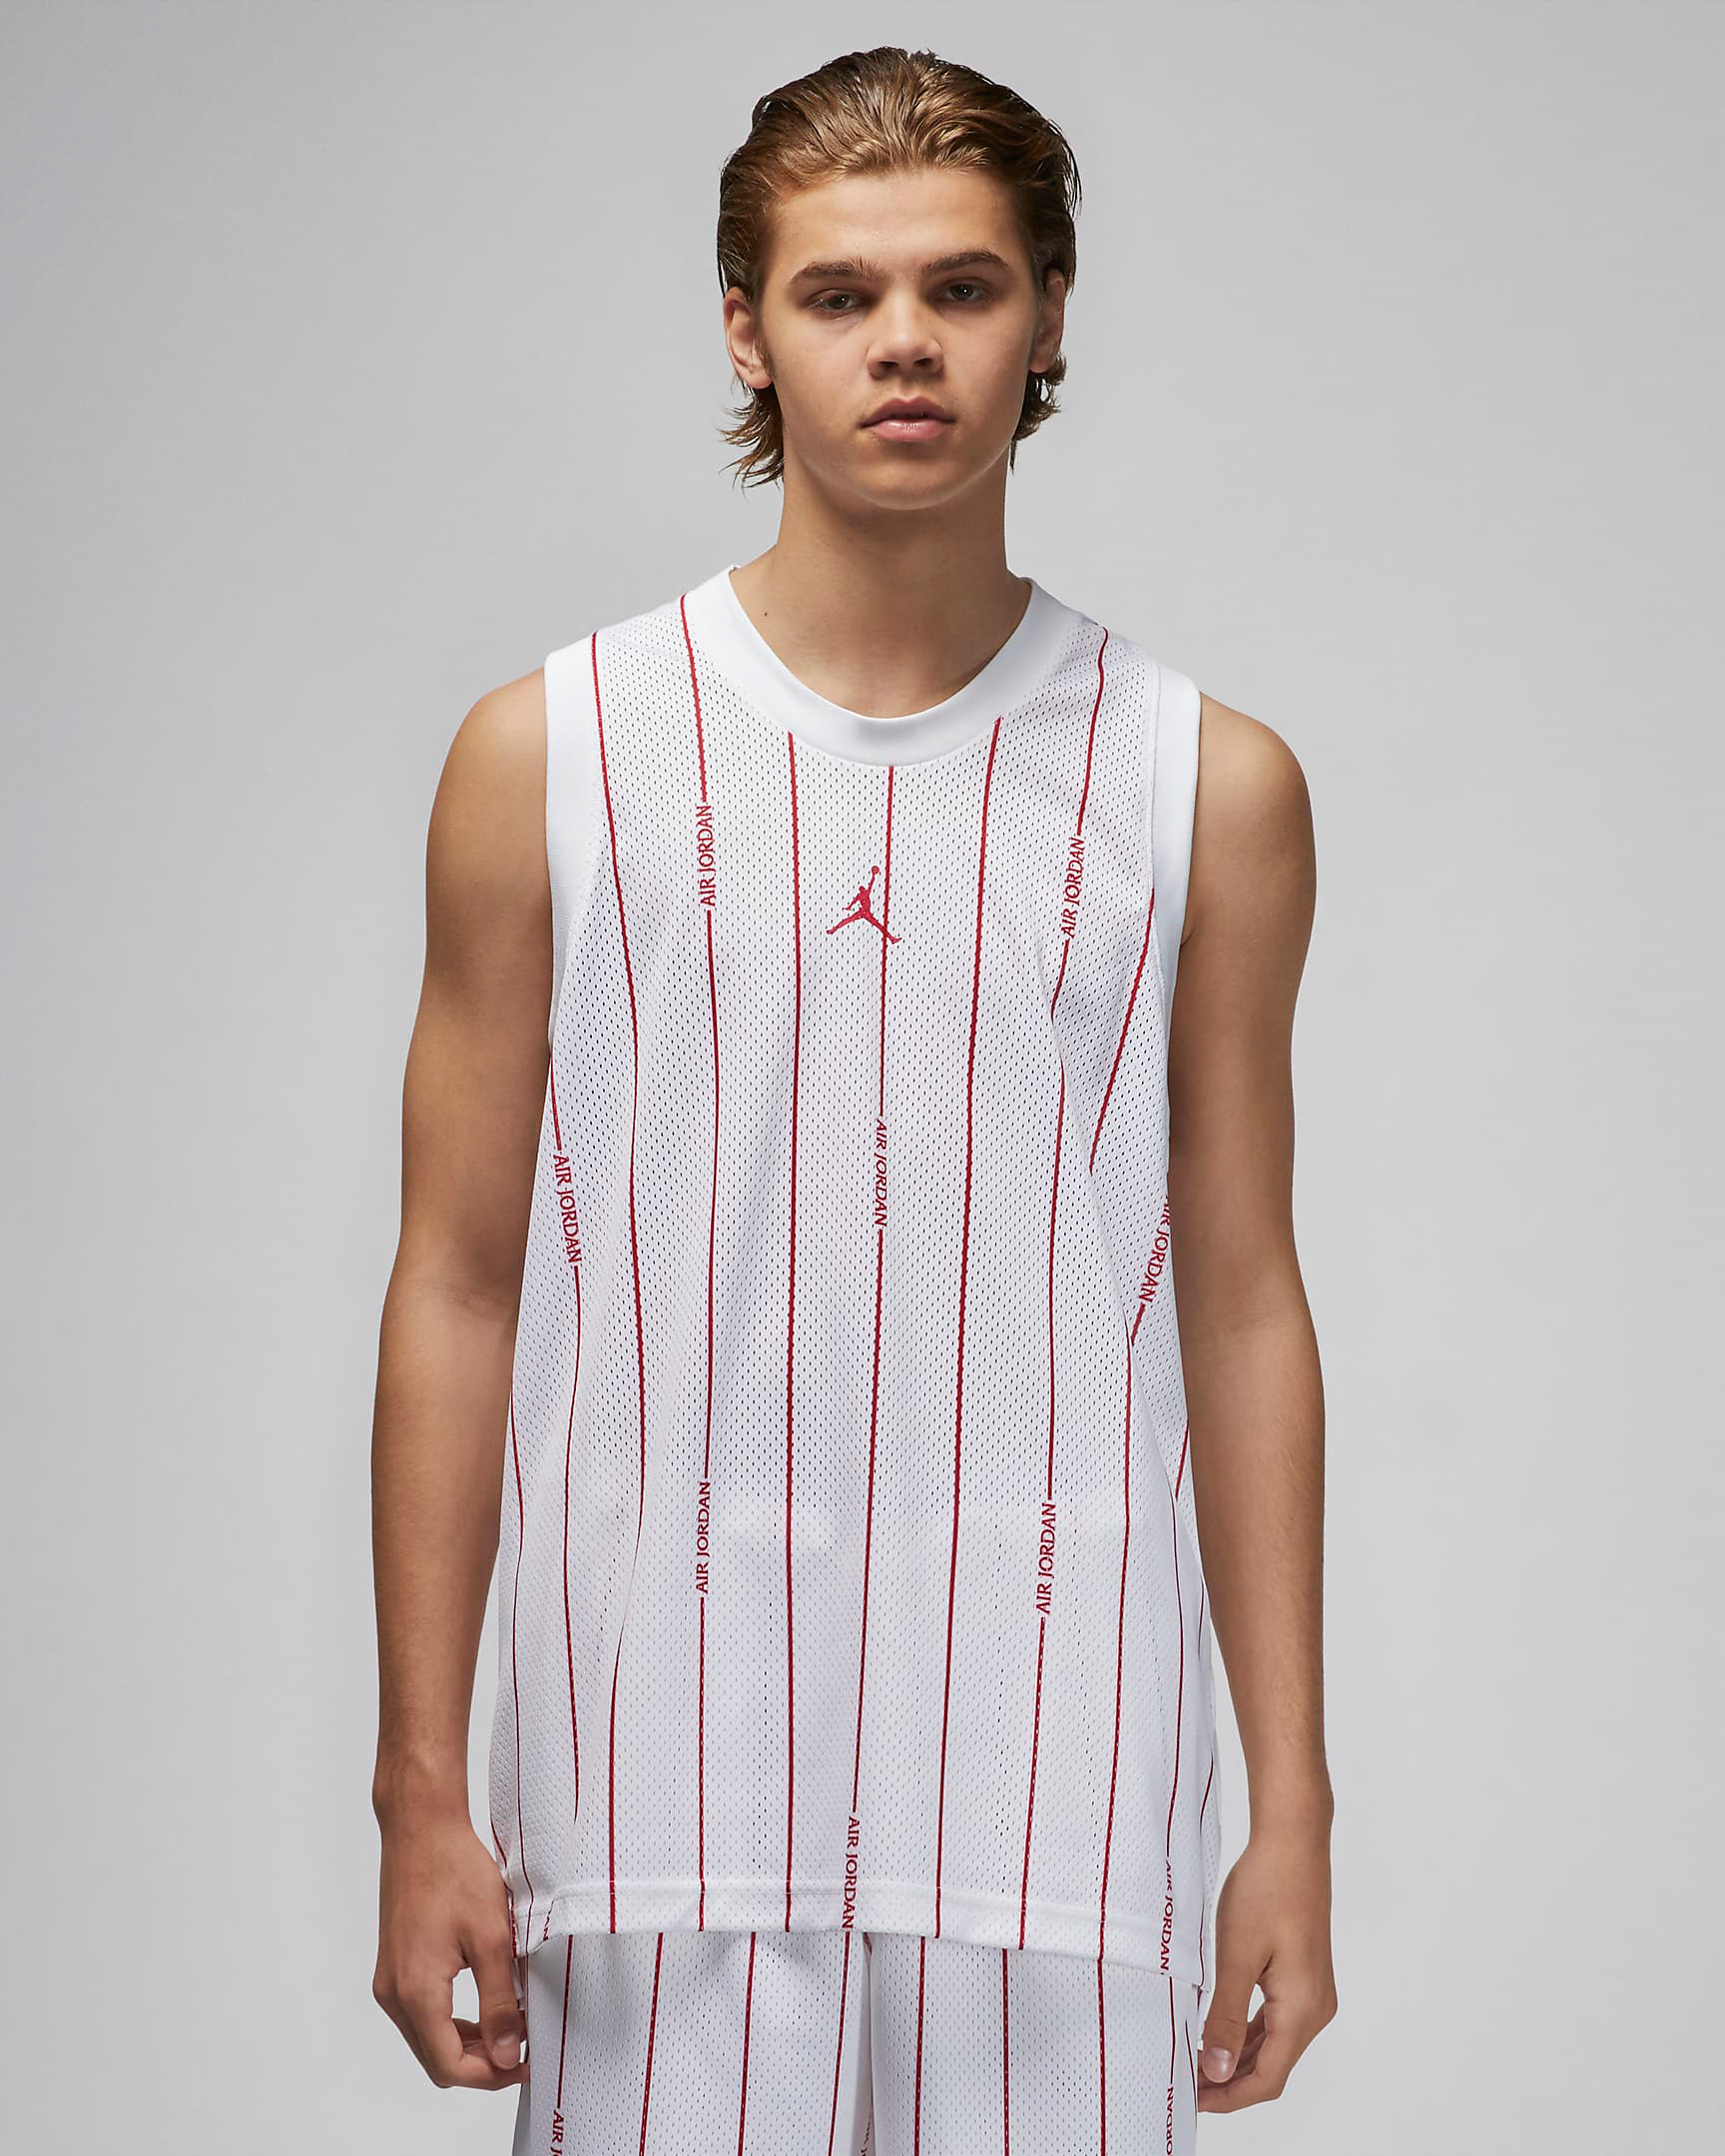 jordan-essentials-printed-striped-jersey-white-gym-red-1